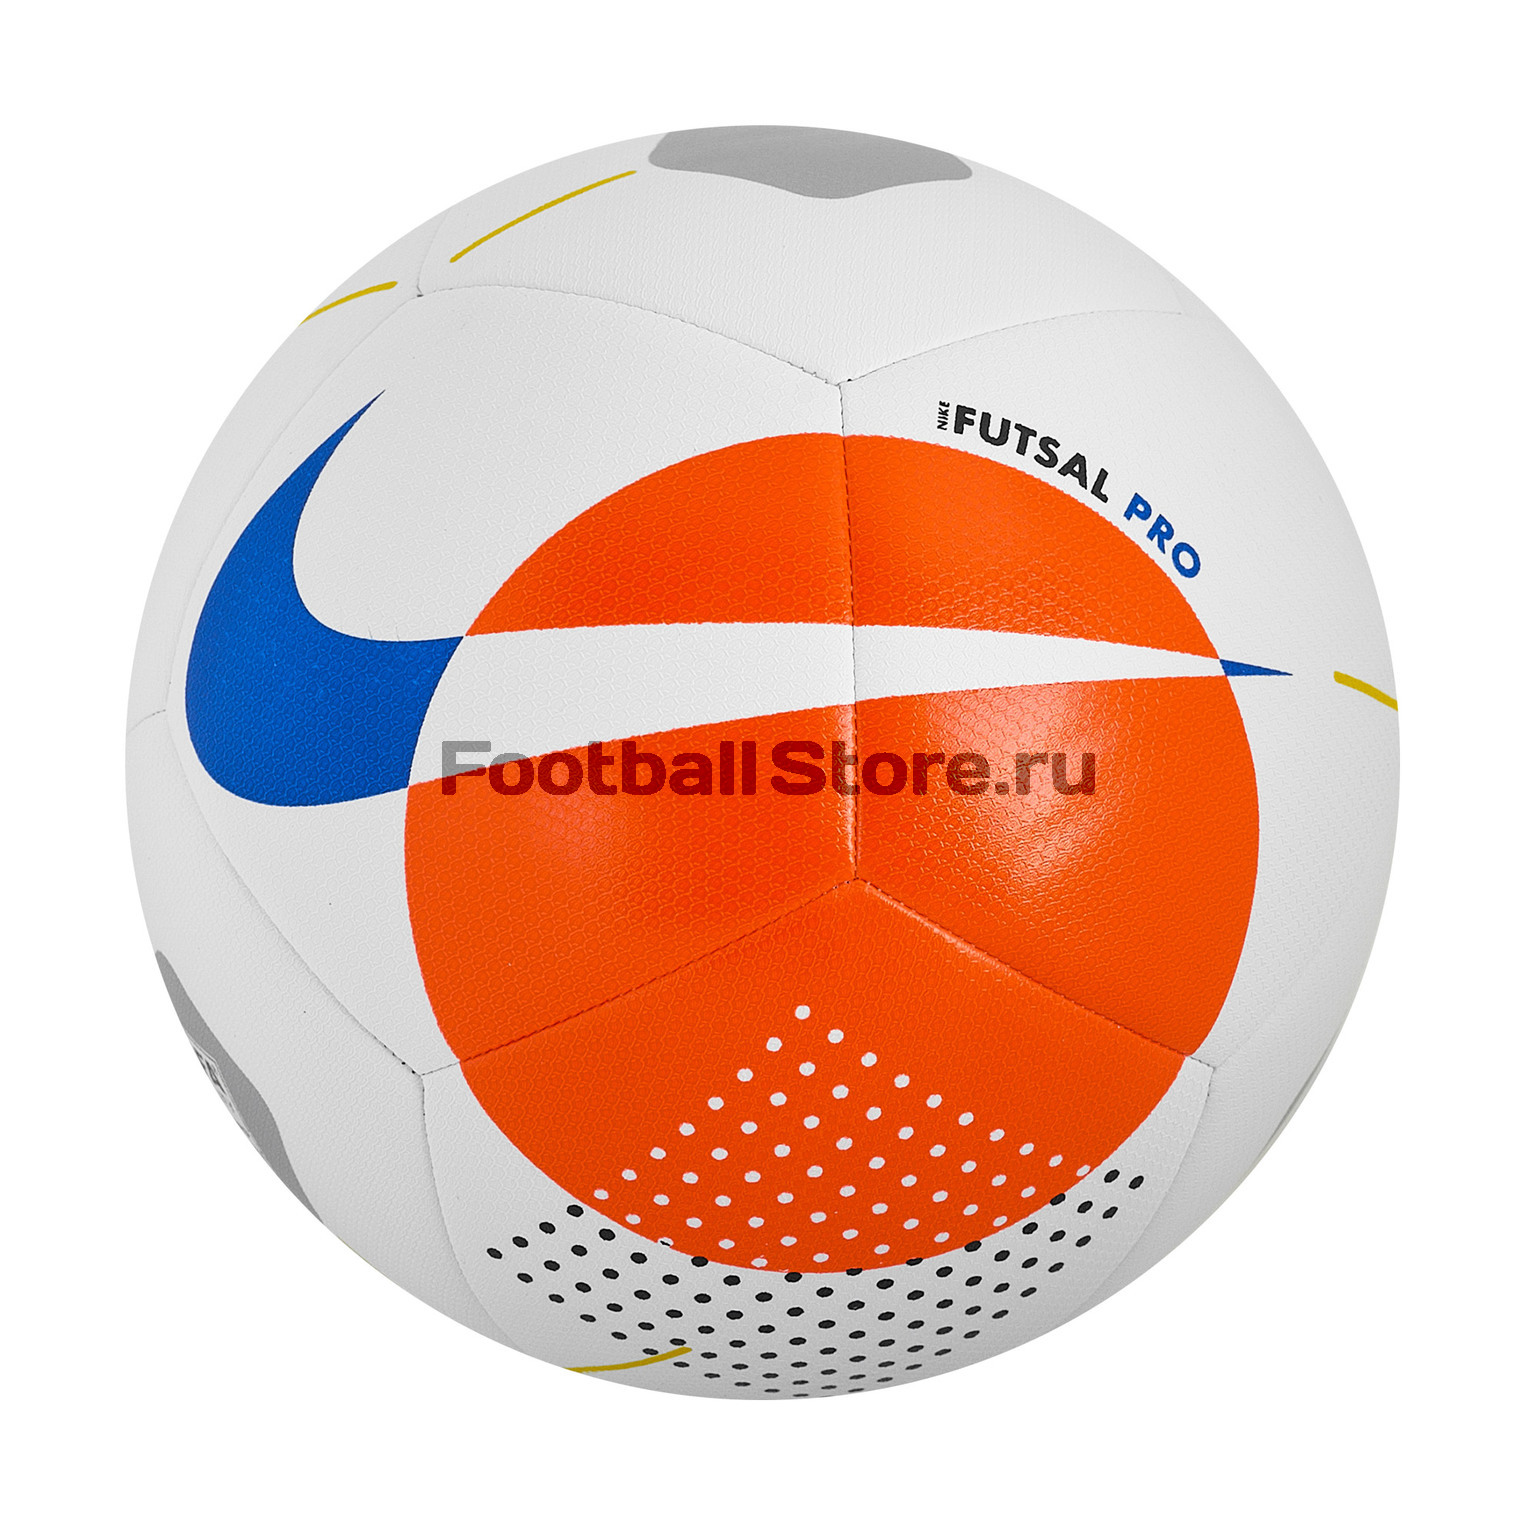 Футзальный мяч Nike Futsal Pro SC3971-100